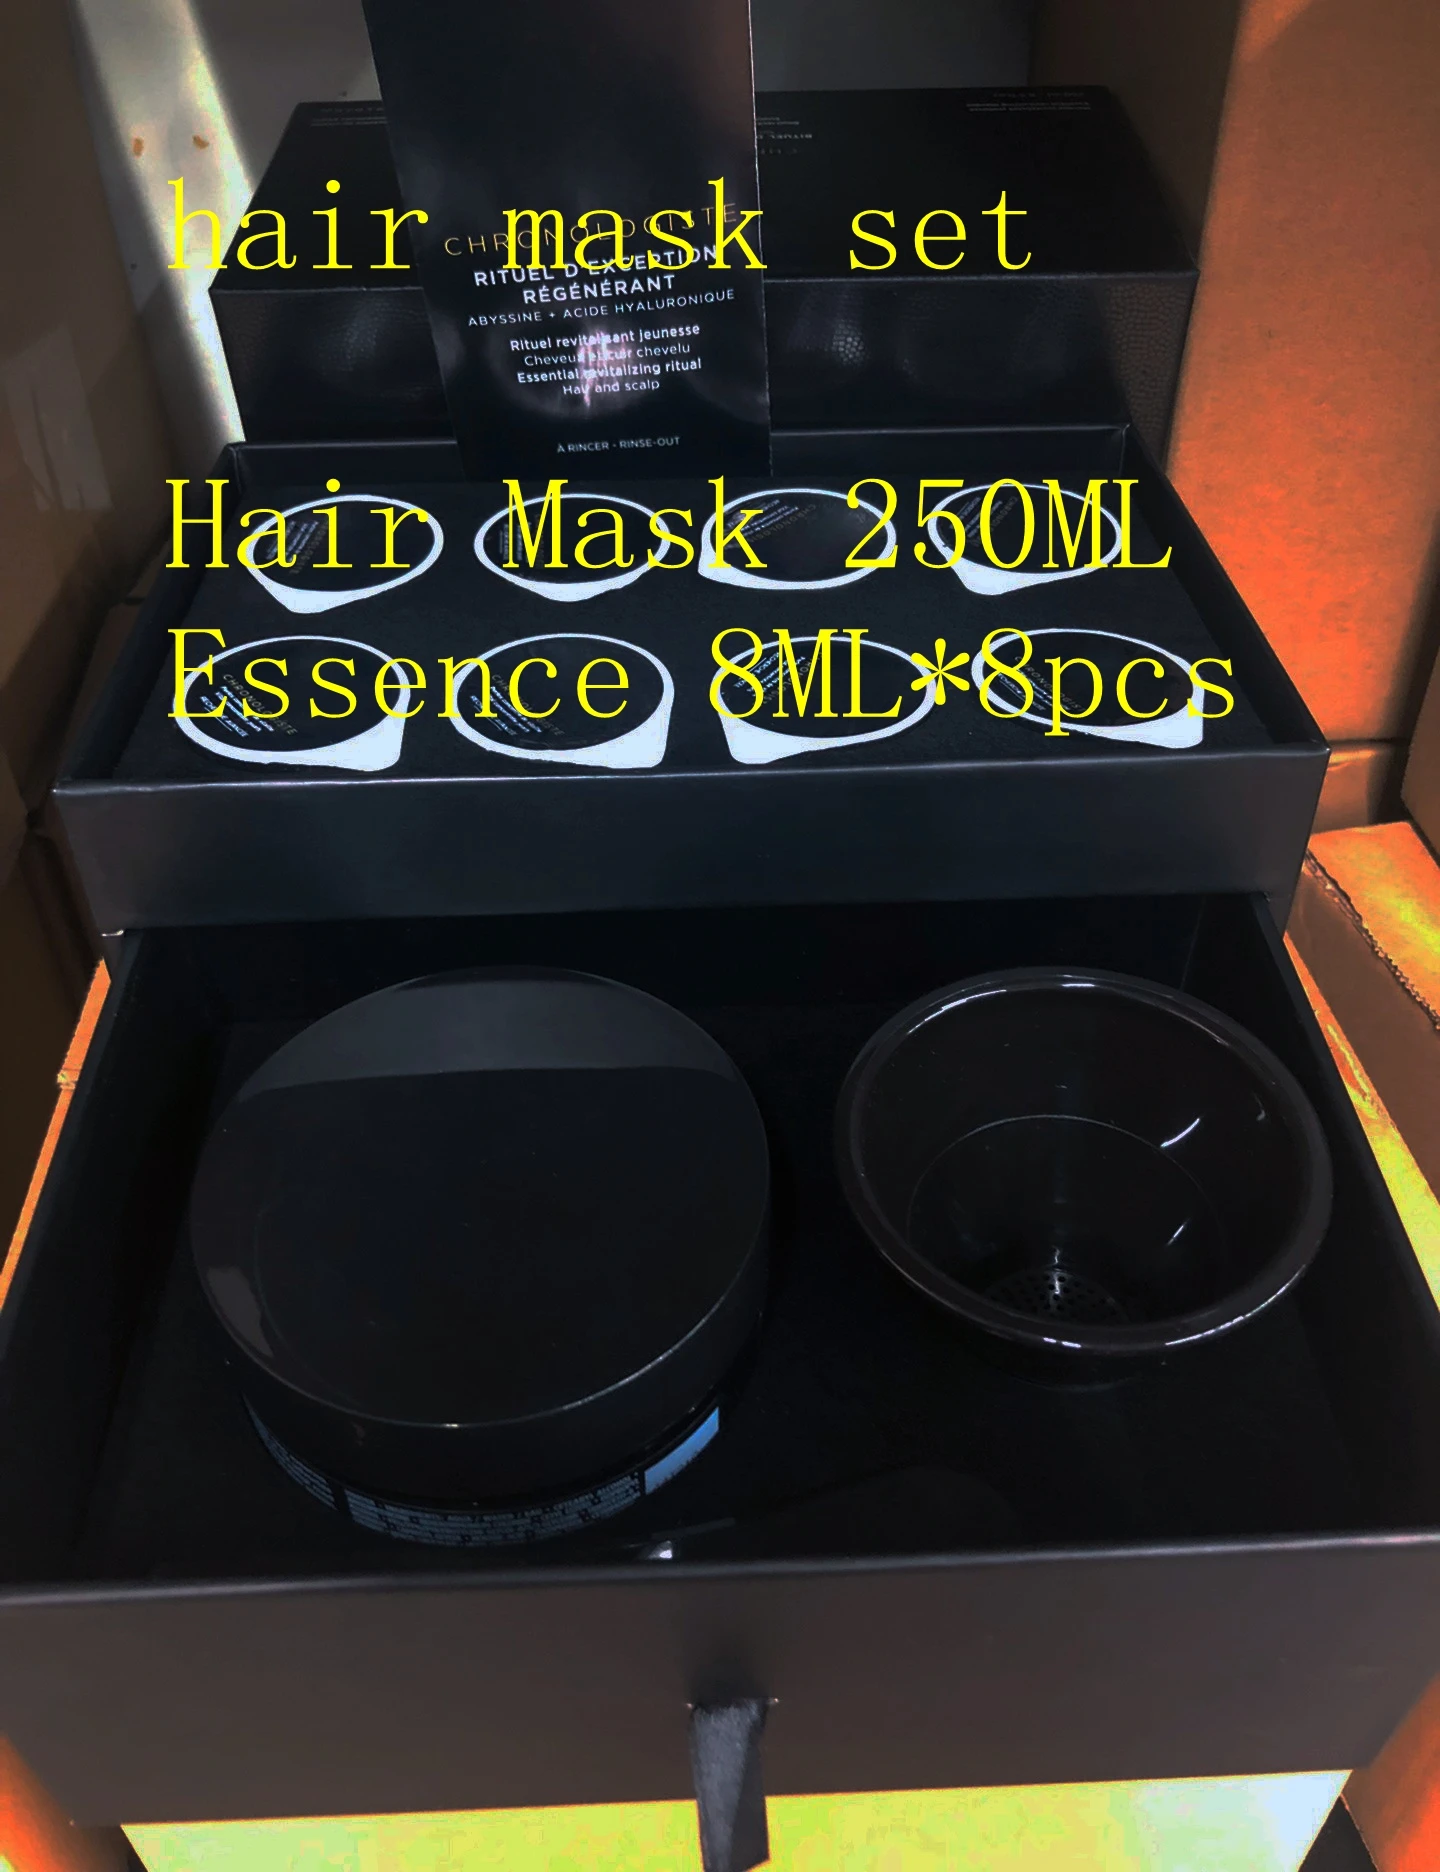 NEW Hair Mask Set Hair Mask 250ML Essence 8ML&8pcs Water Conditioner Repair Nourish Hair Care+GIFT